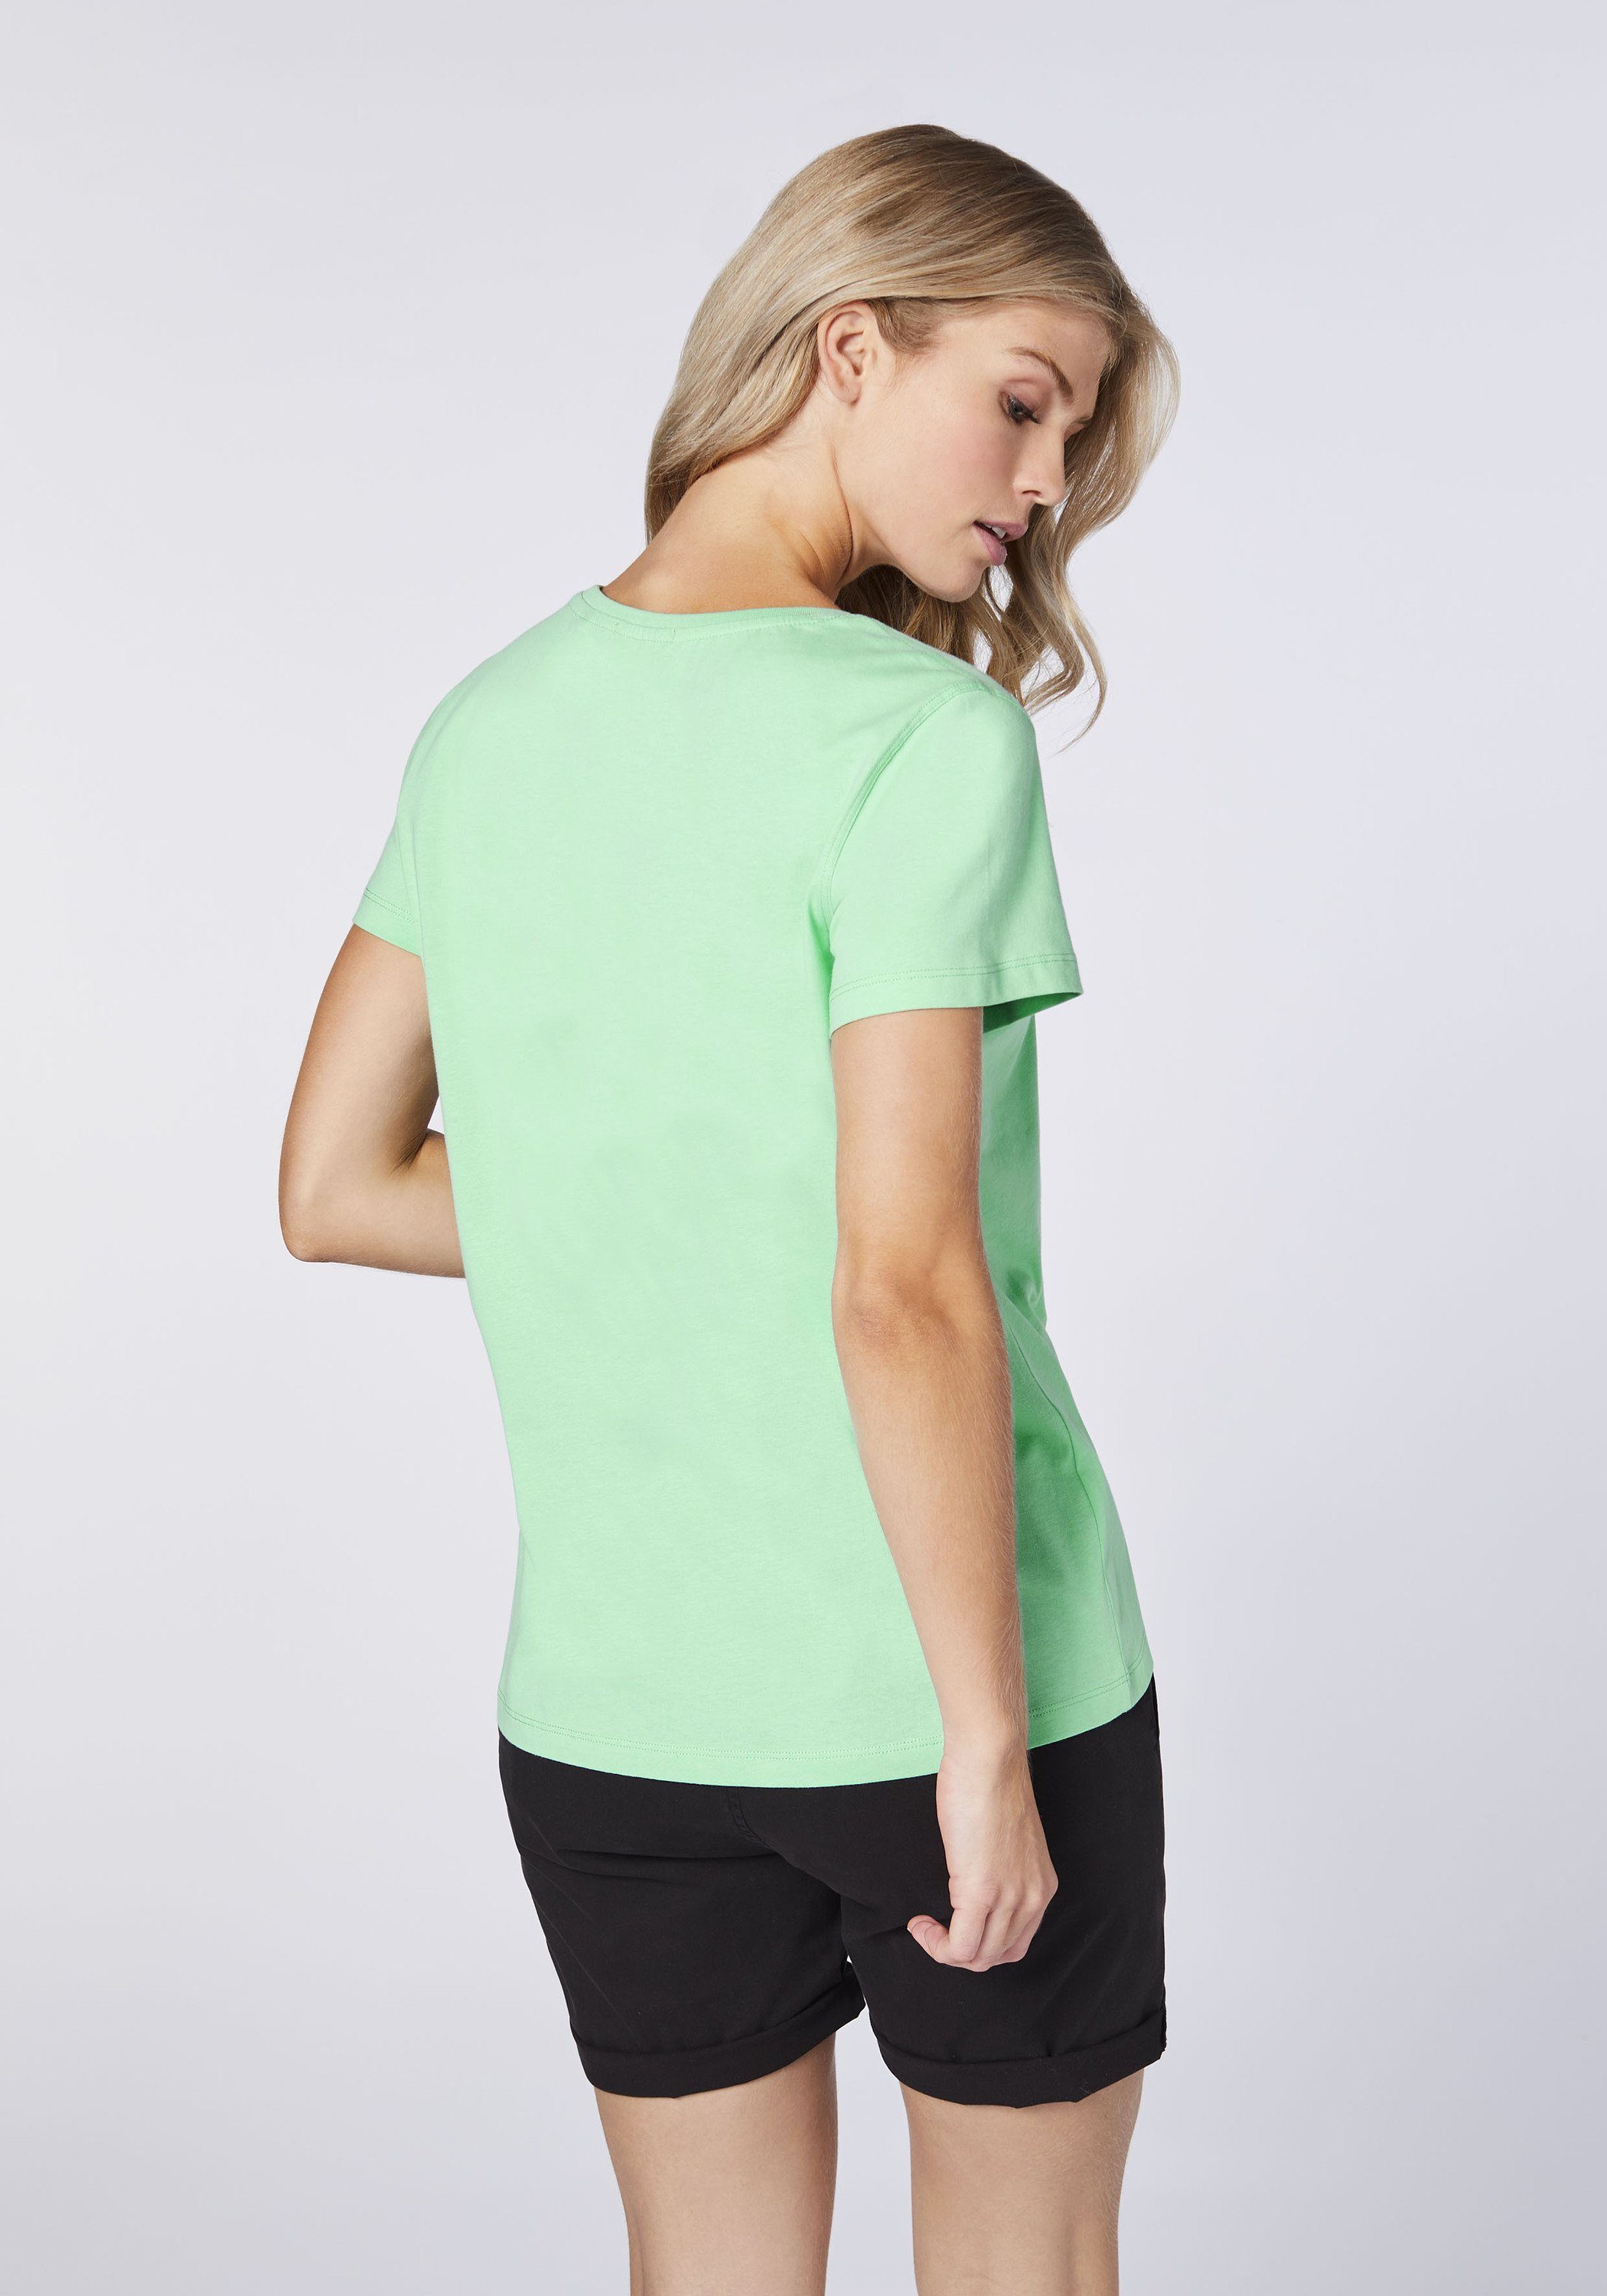 Chiemsee Print-Shirt farbenfrohem T-Shirt 1 mit Frontprint Green Neptune